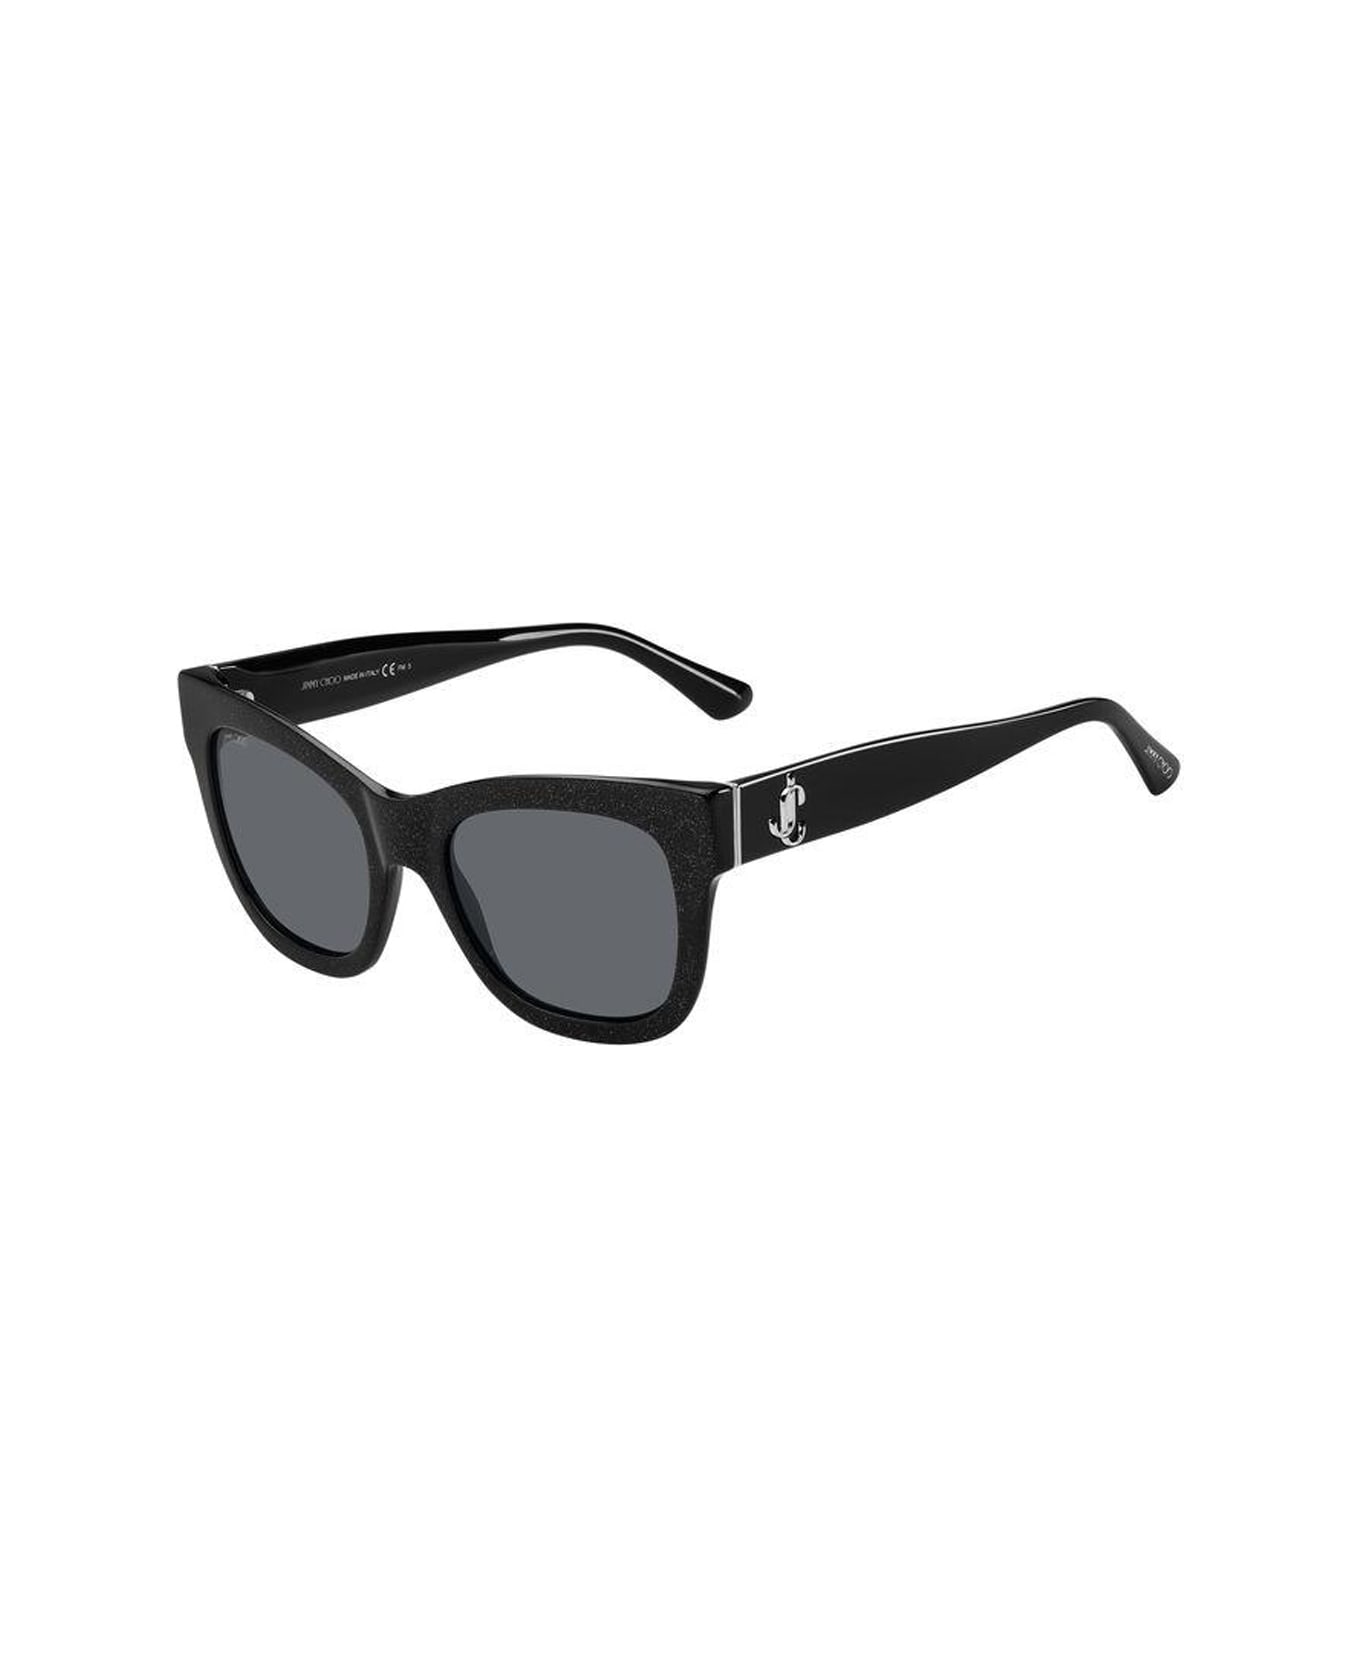 Jimmy Choo Eyewear Jan/s Sunglasses - Nero サングラス